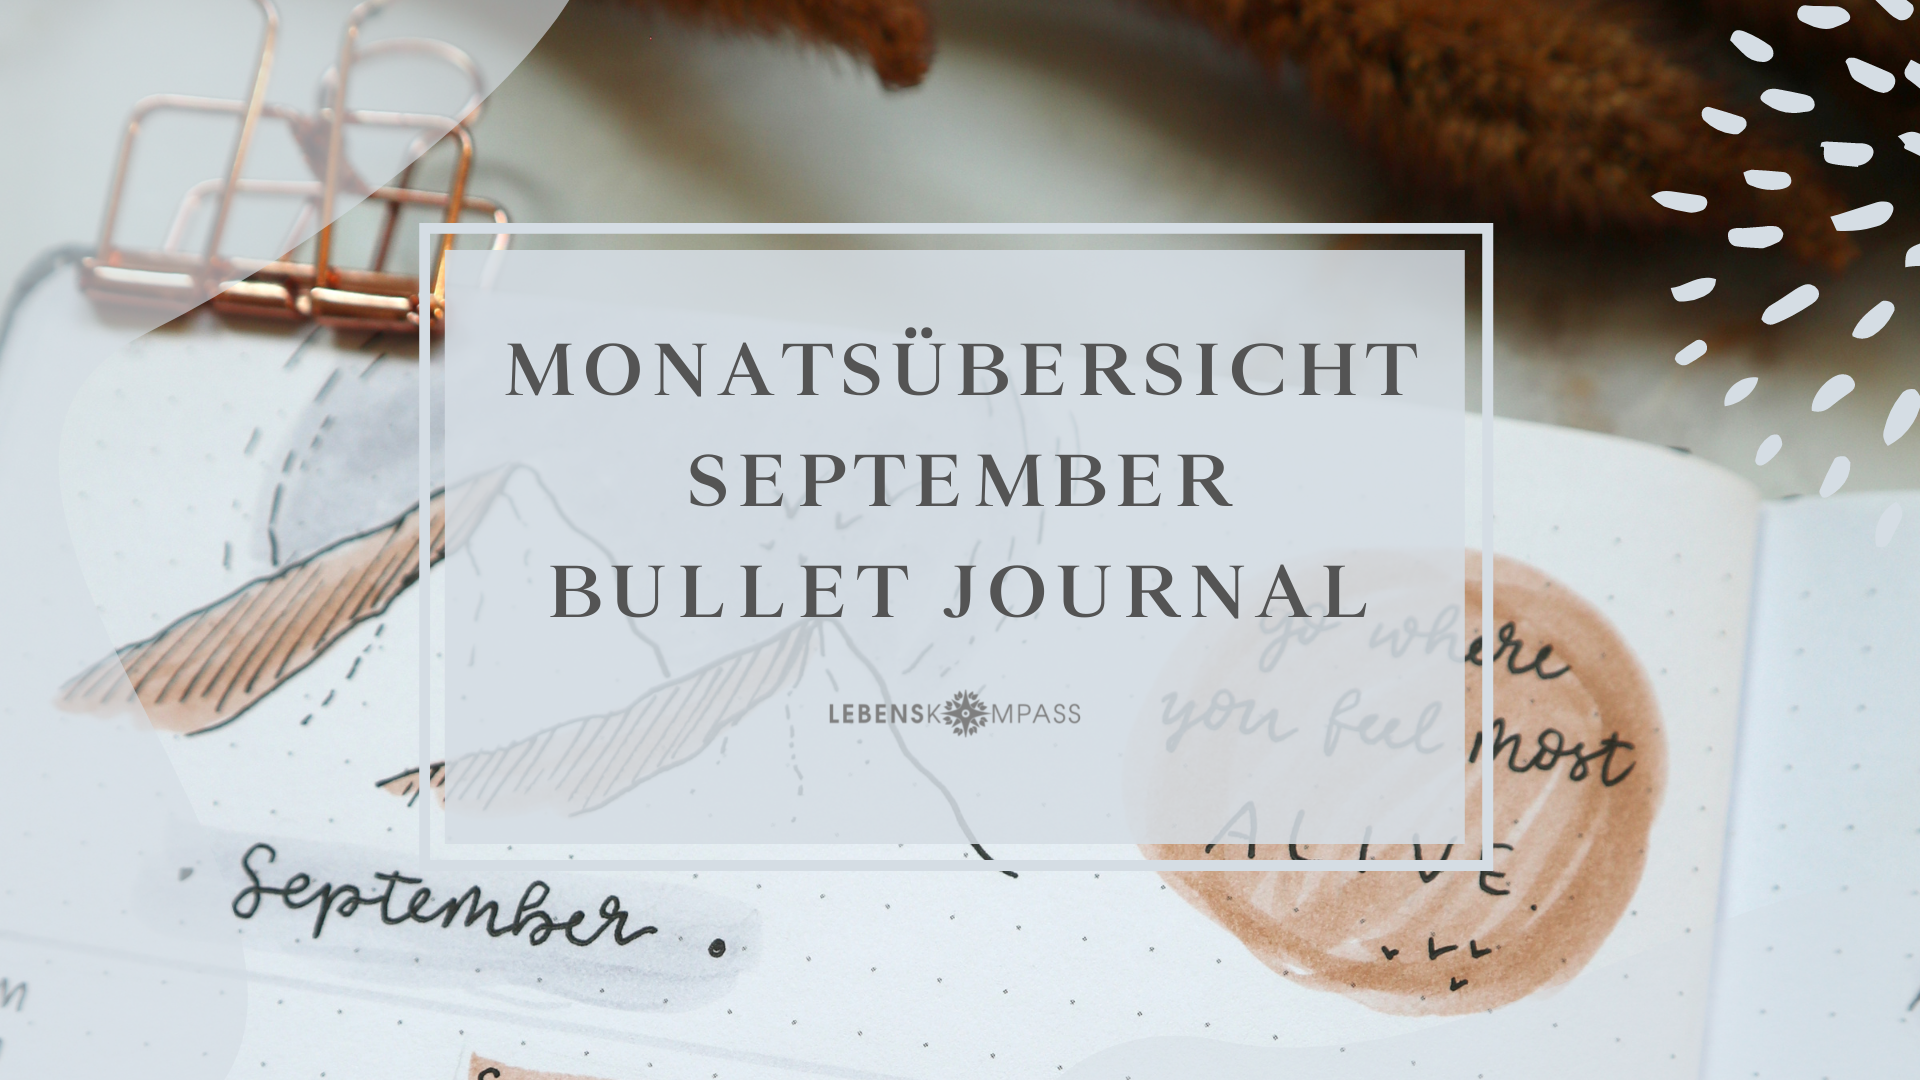 Bullet Journal September: Monatsübersicht mit Alpen-Design